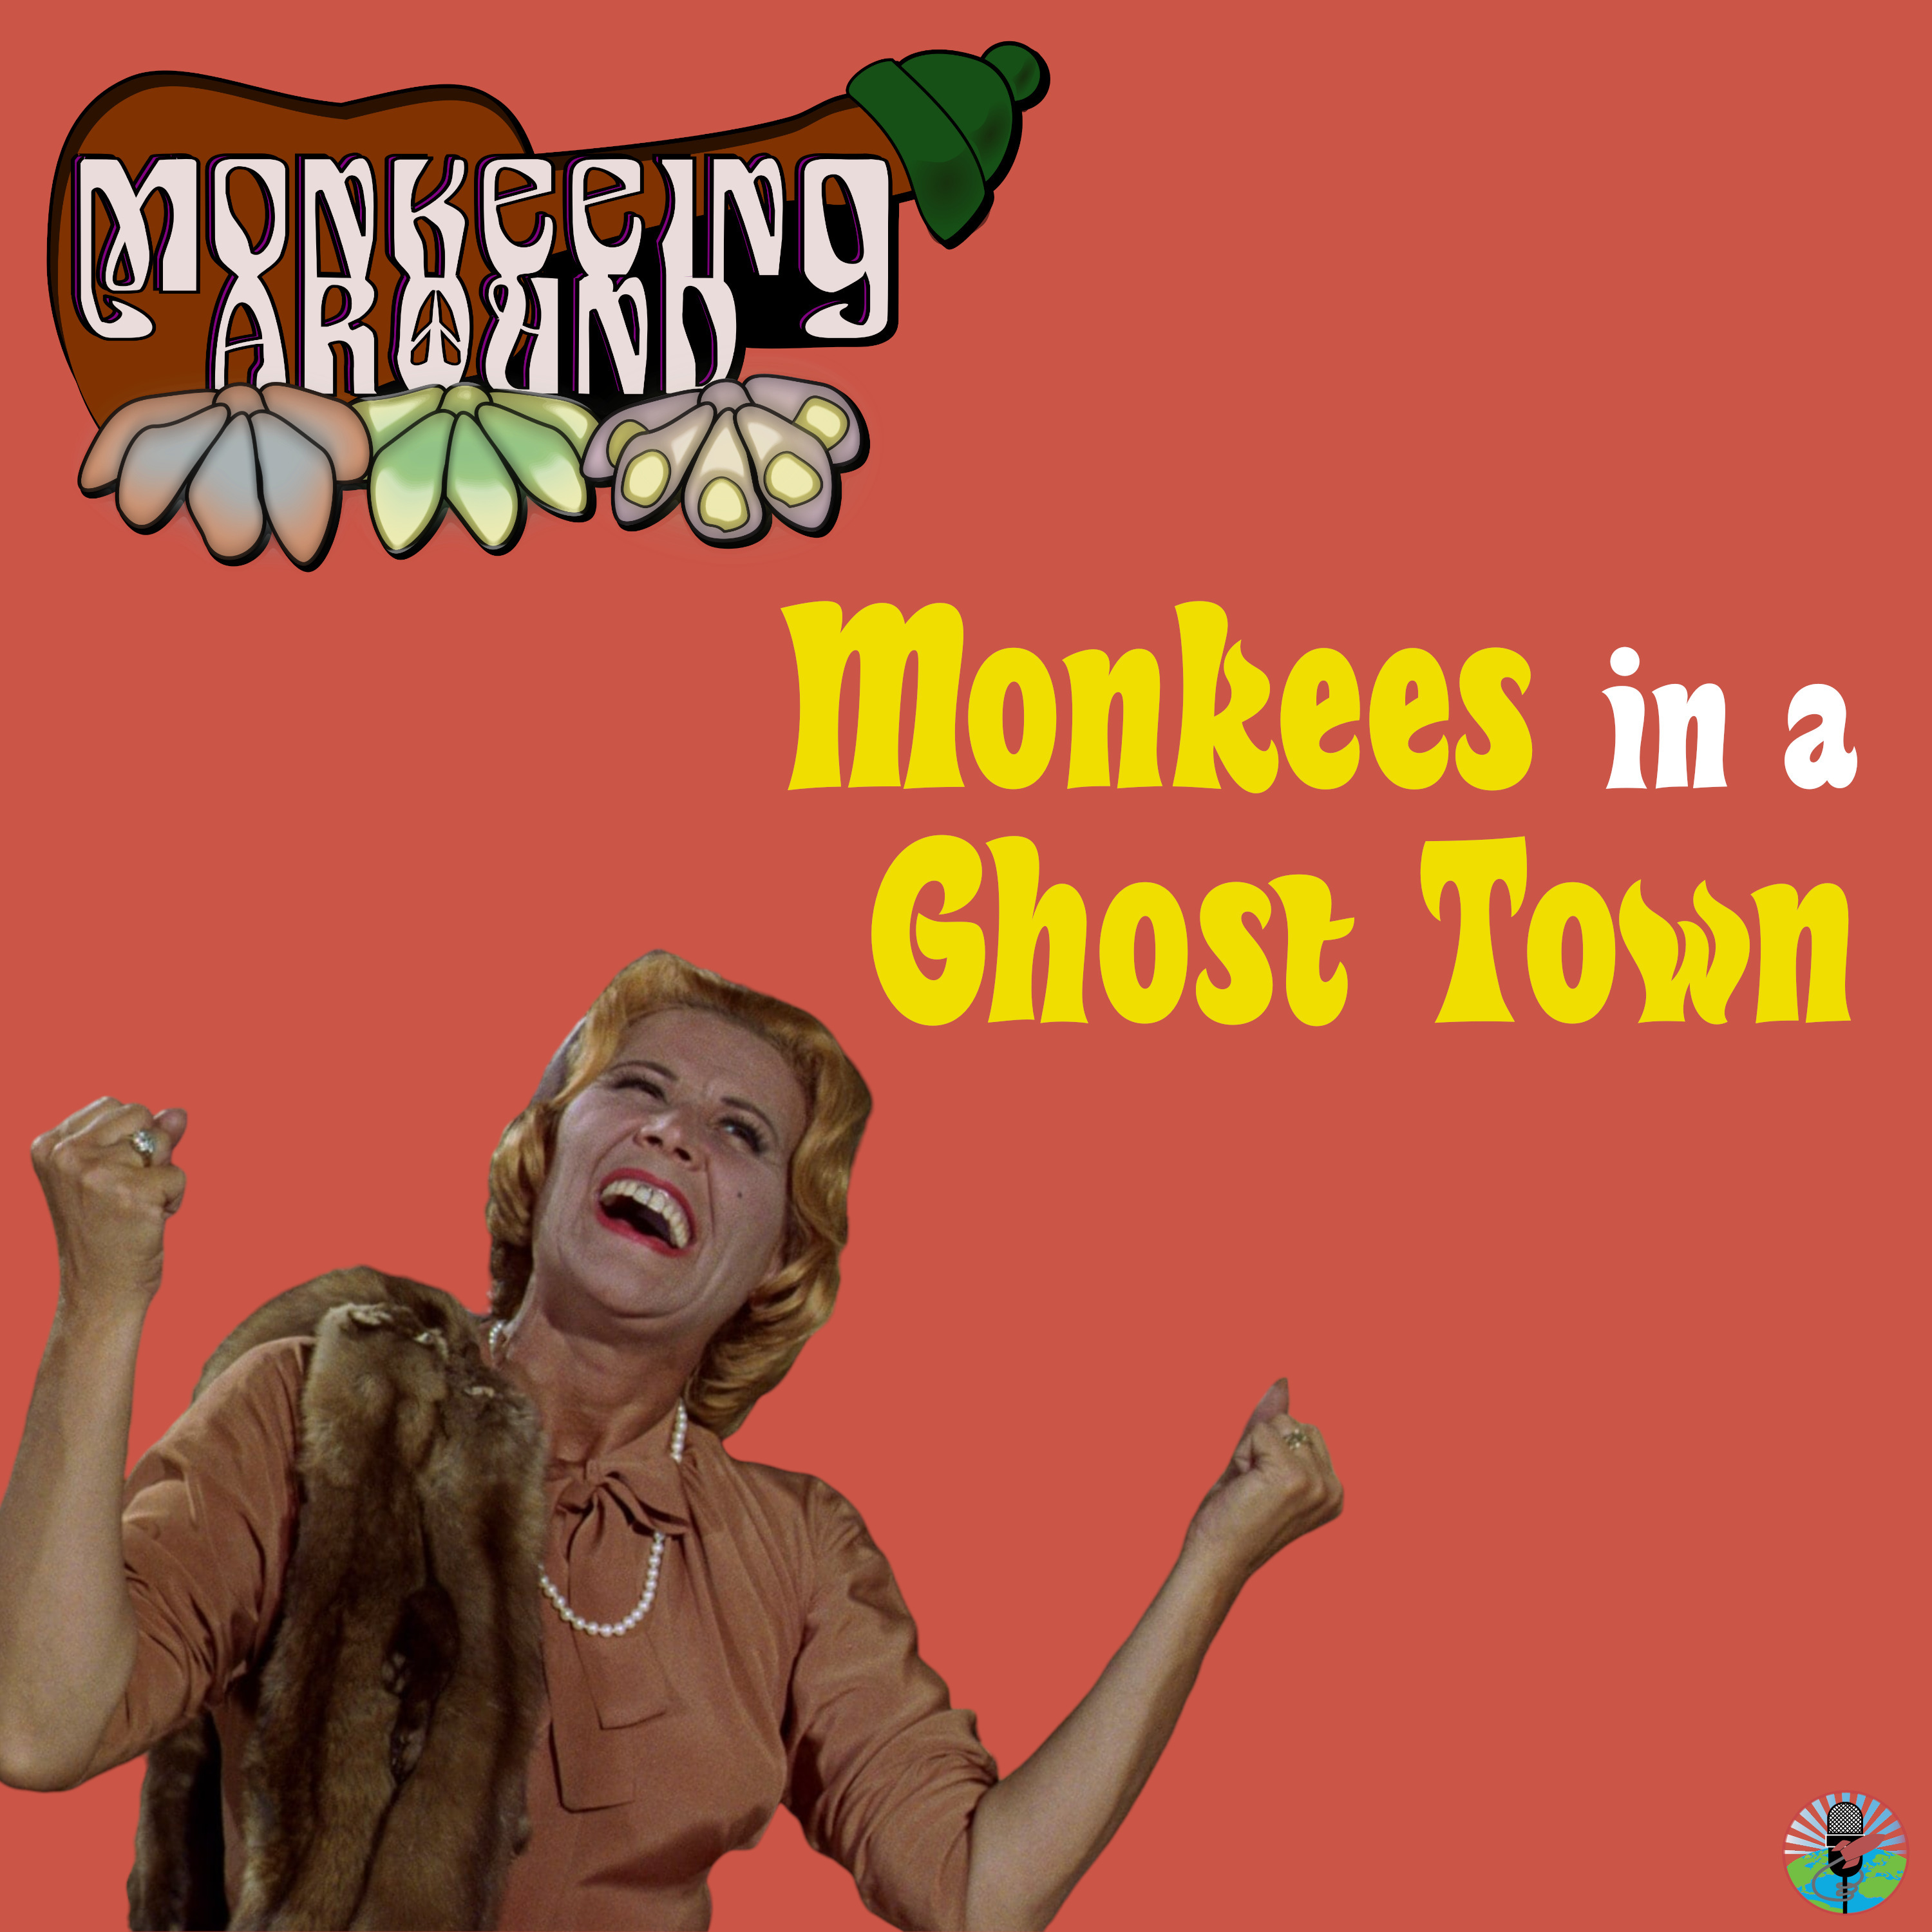 Monkees_in_a_Ghost_Town7xfsm.jpg